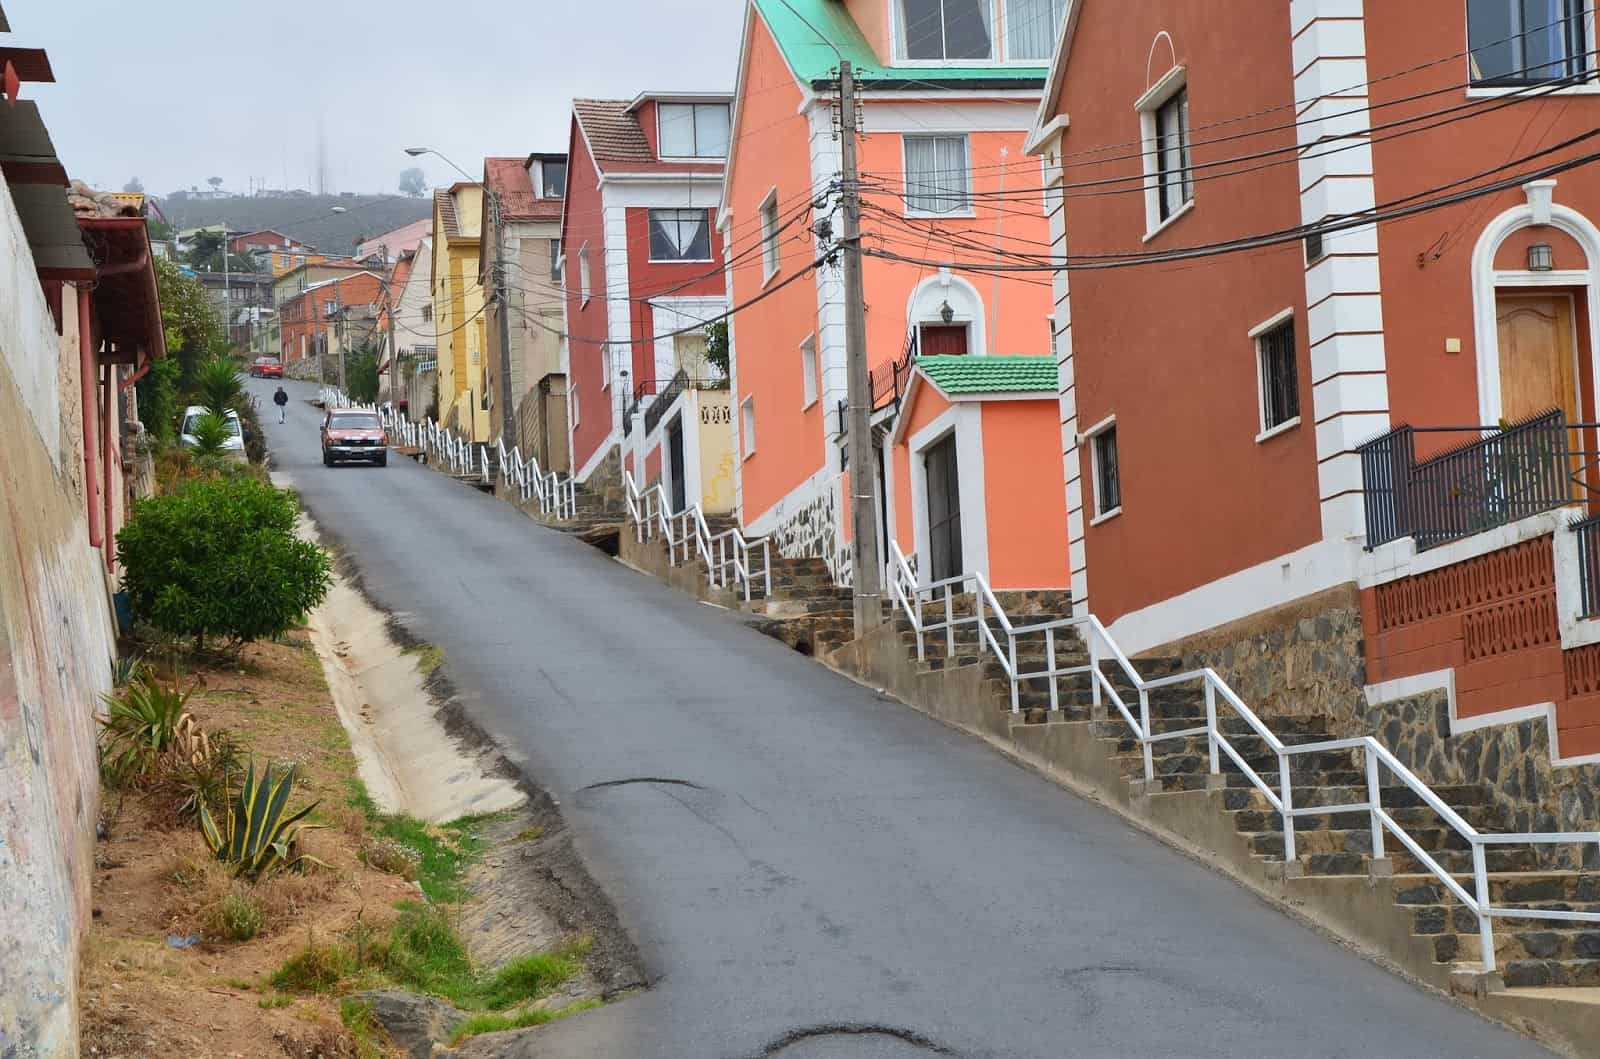 Along Av. Alemania in Valparaíso, Chile